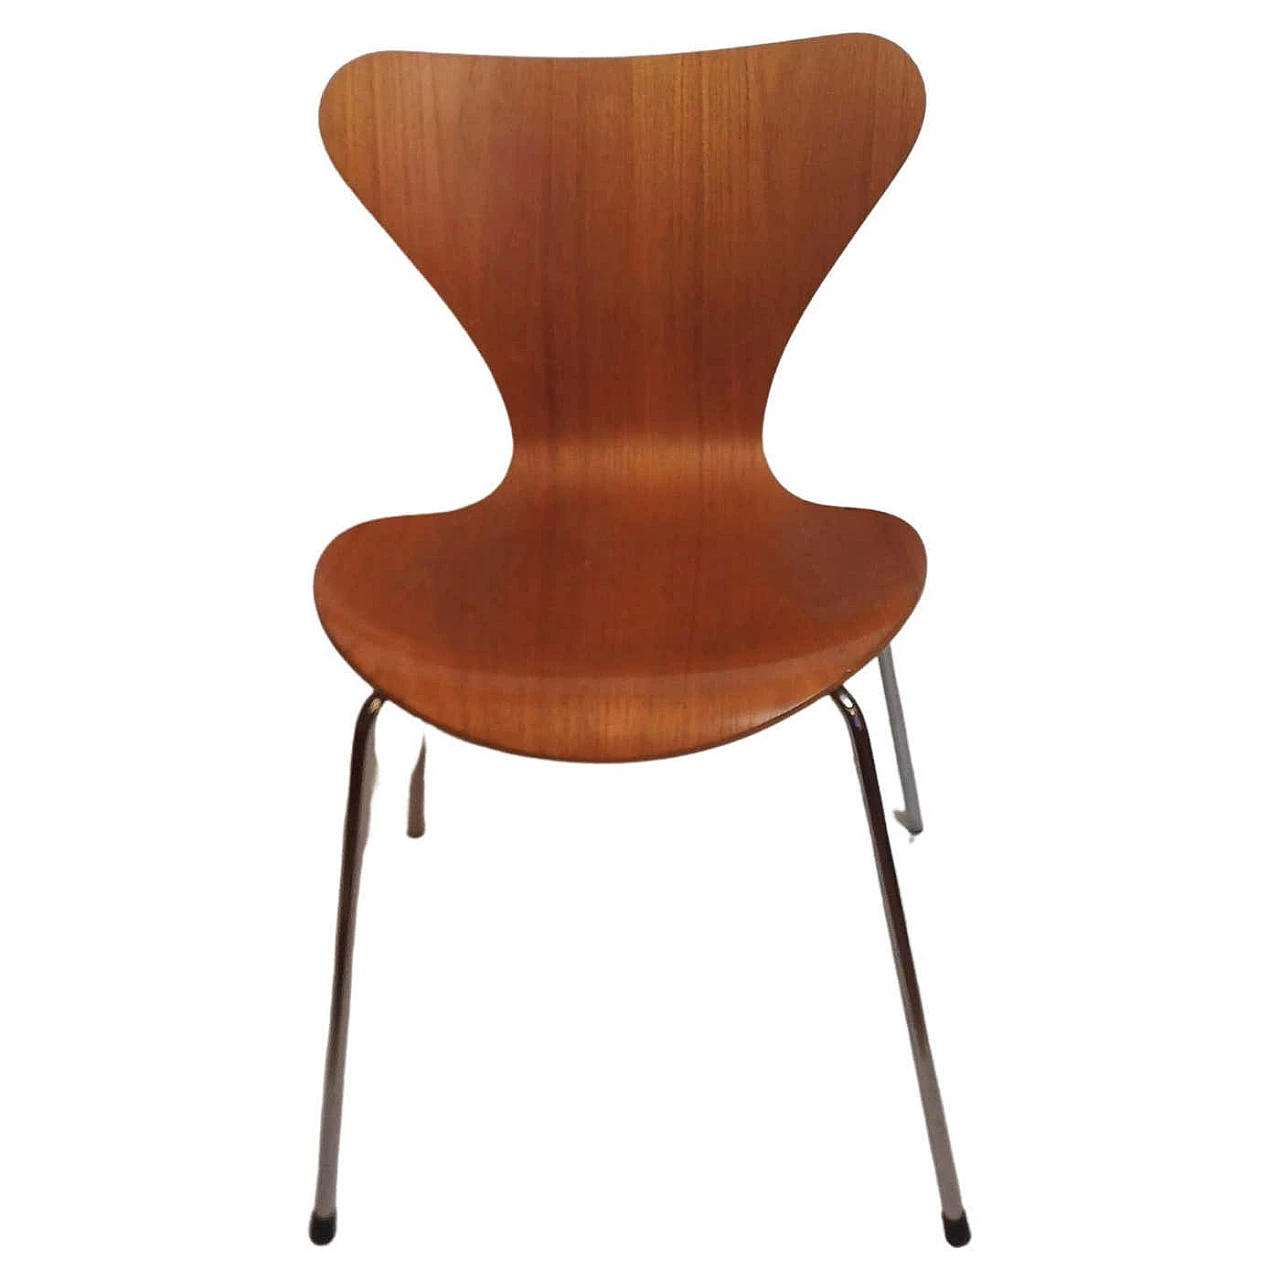 Series 7 wooden chair by Arne Jacobsen for Fritz Hansen, 1992 1